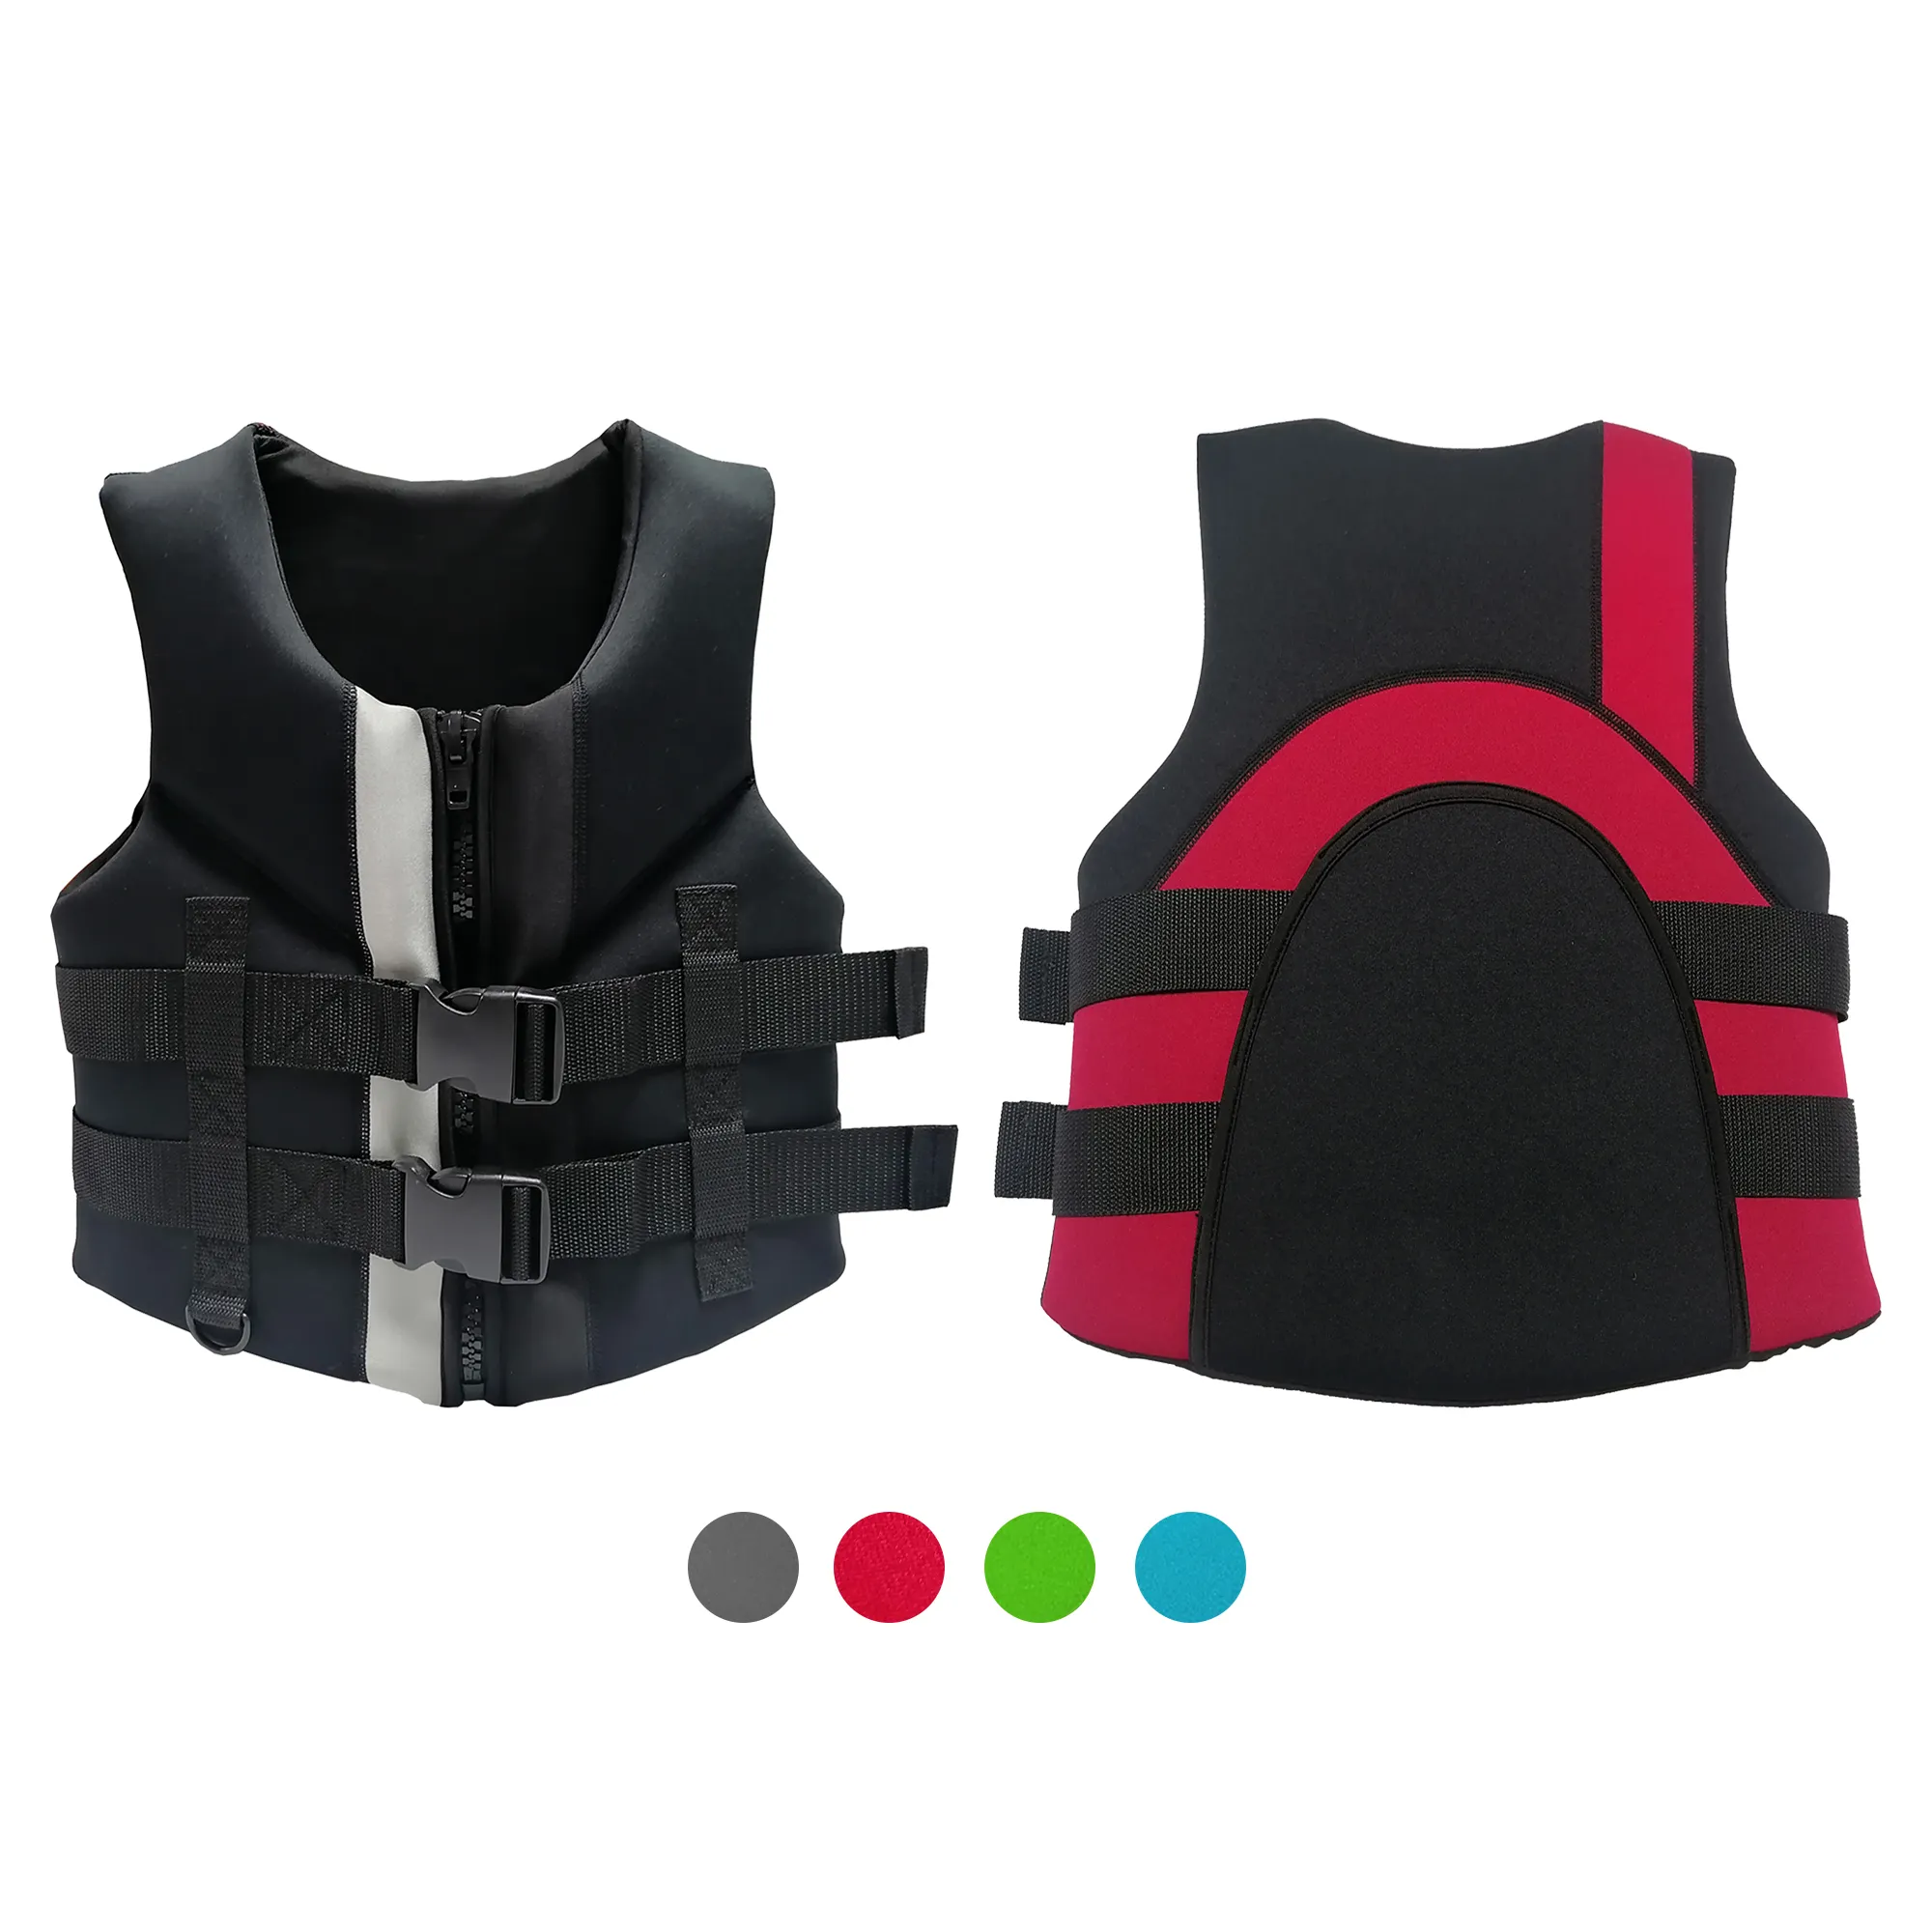 Approved Wholesale Customized OEM Life Vest Neoprene Swimming Sailing Life Vest Jacket for Kids